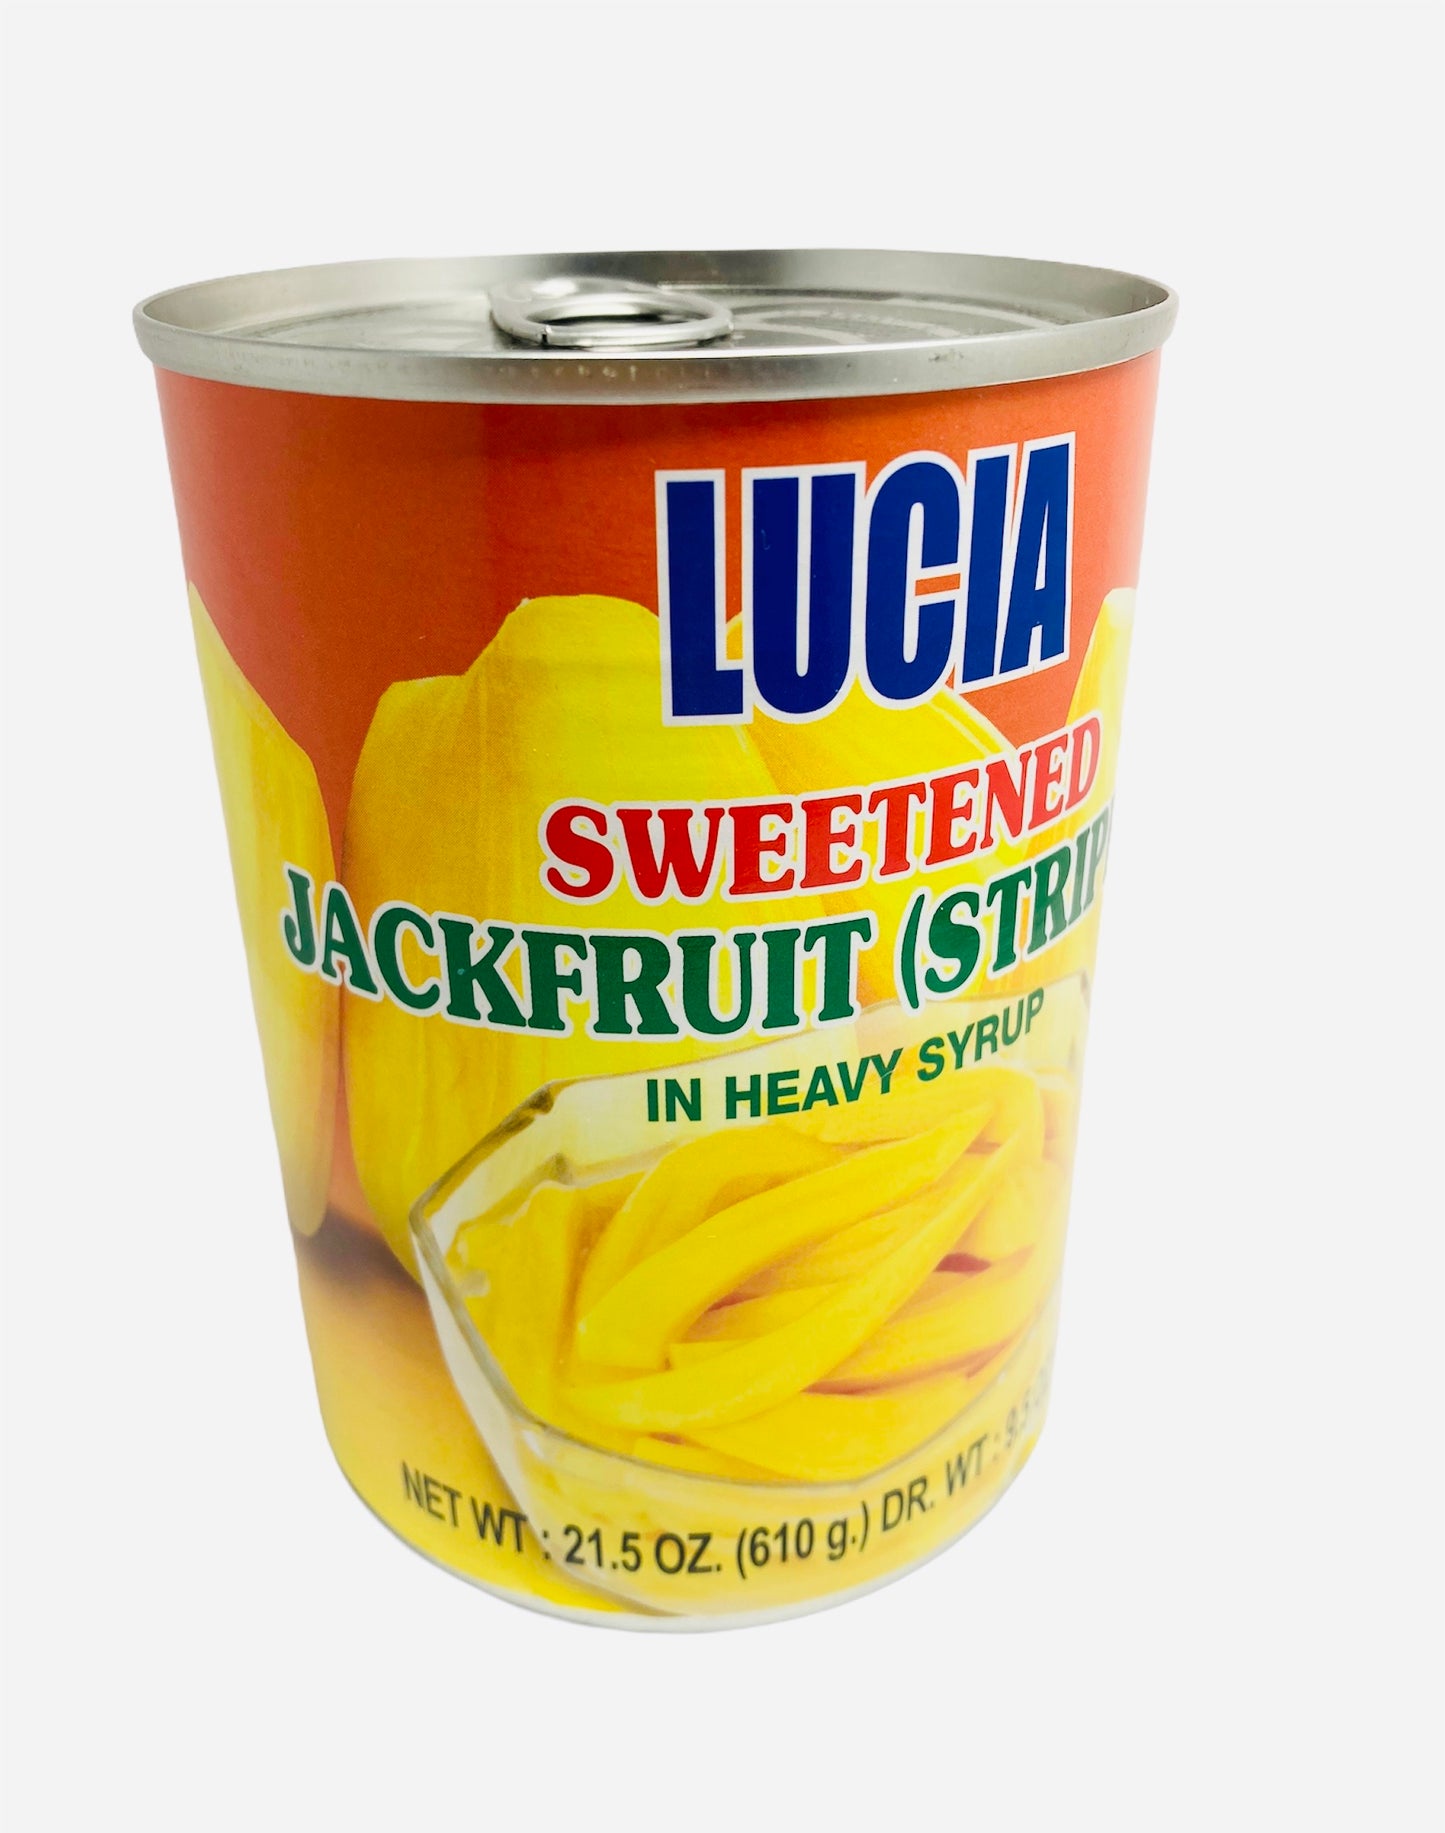 LUCIA Sweetened Jackfruit (Stripped) 610g